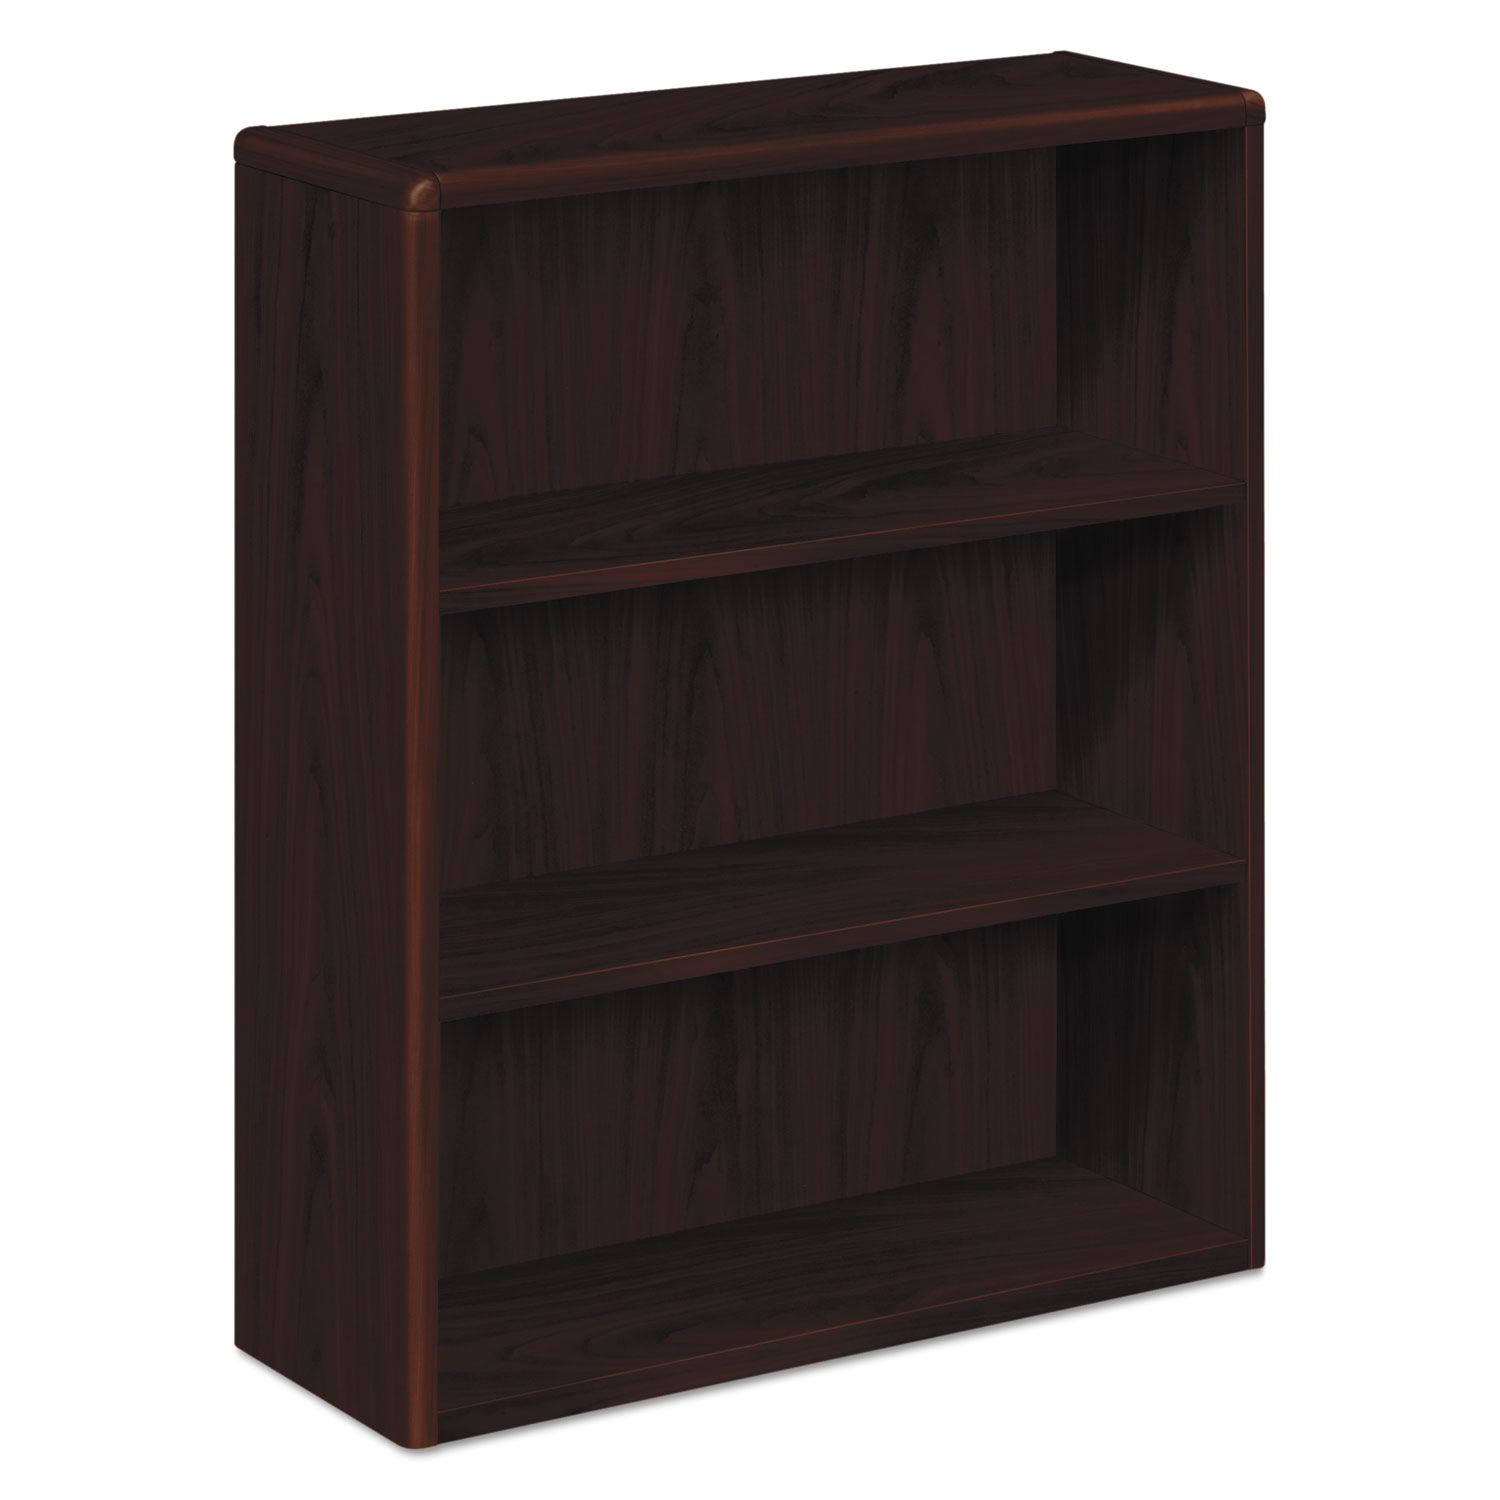  HON H10753.NN 10700 Series Wood Bookcase, Three Shelf, 36w x 13 1/8d x 43 3/8h, Mahogany (HON10753NN) 